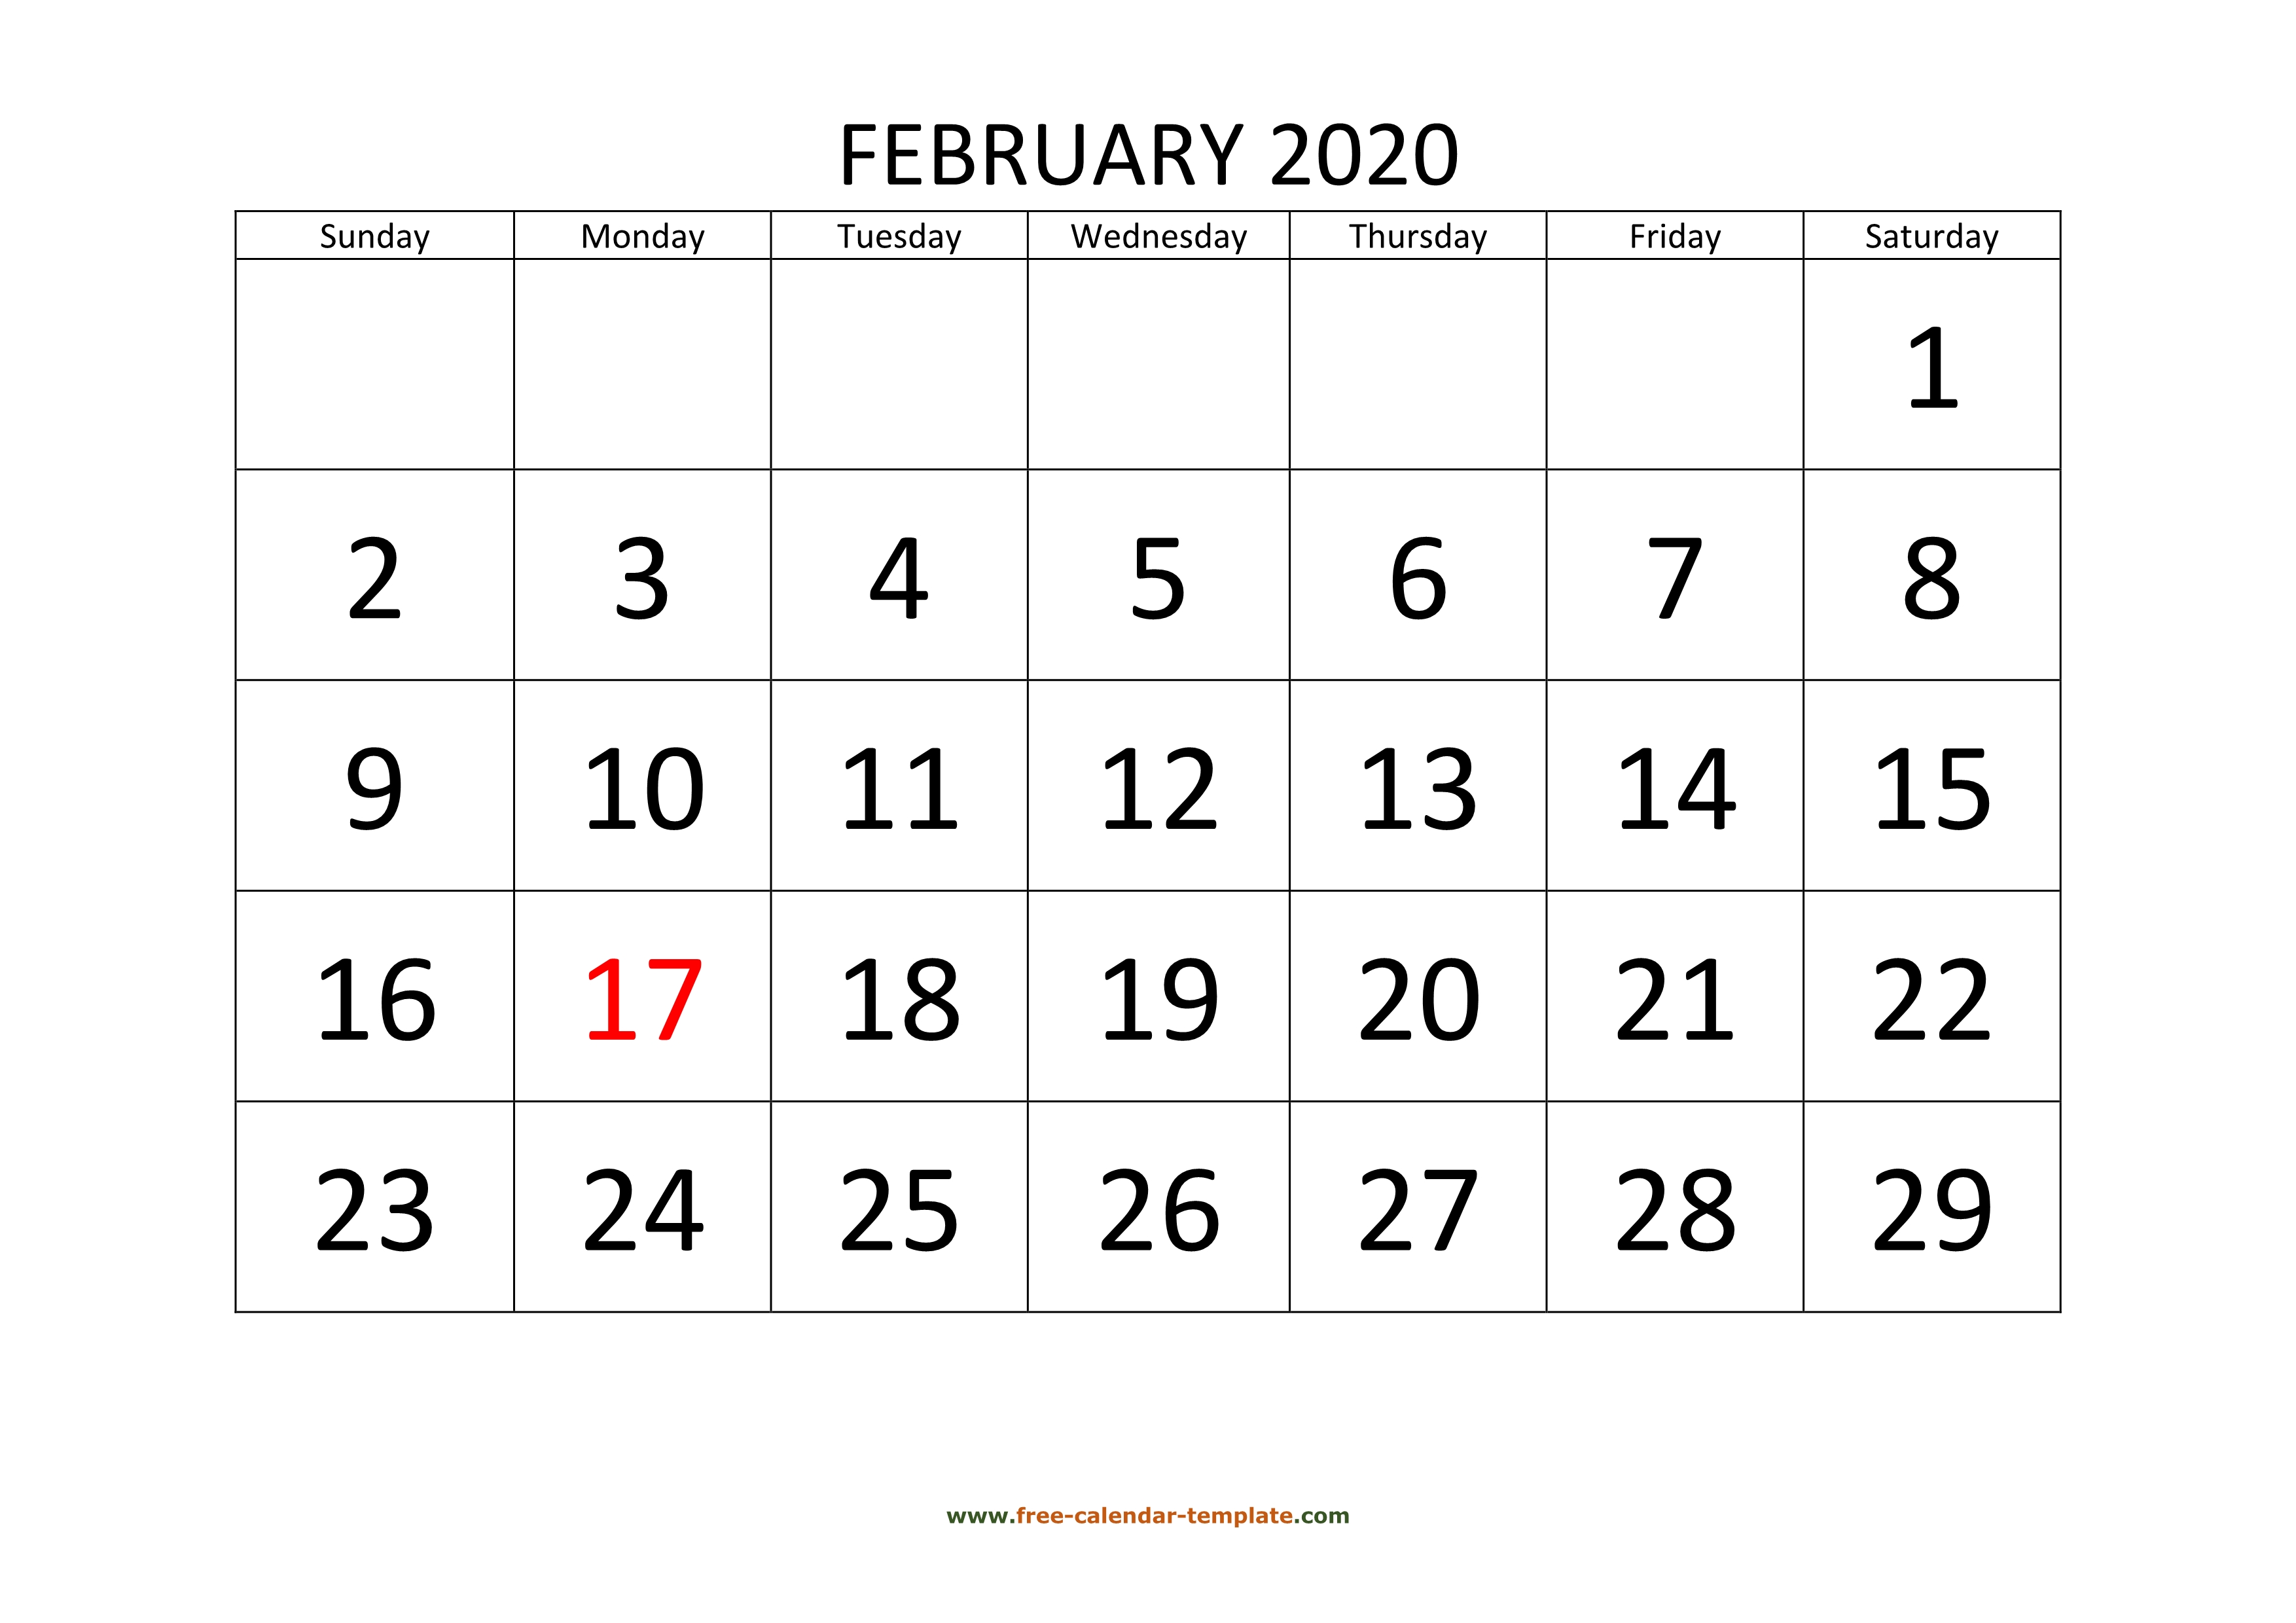 2020 Free Calendar Template from www.free-calendar-template.com